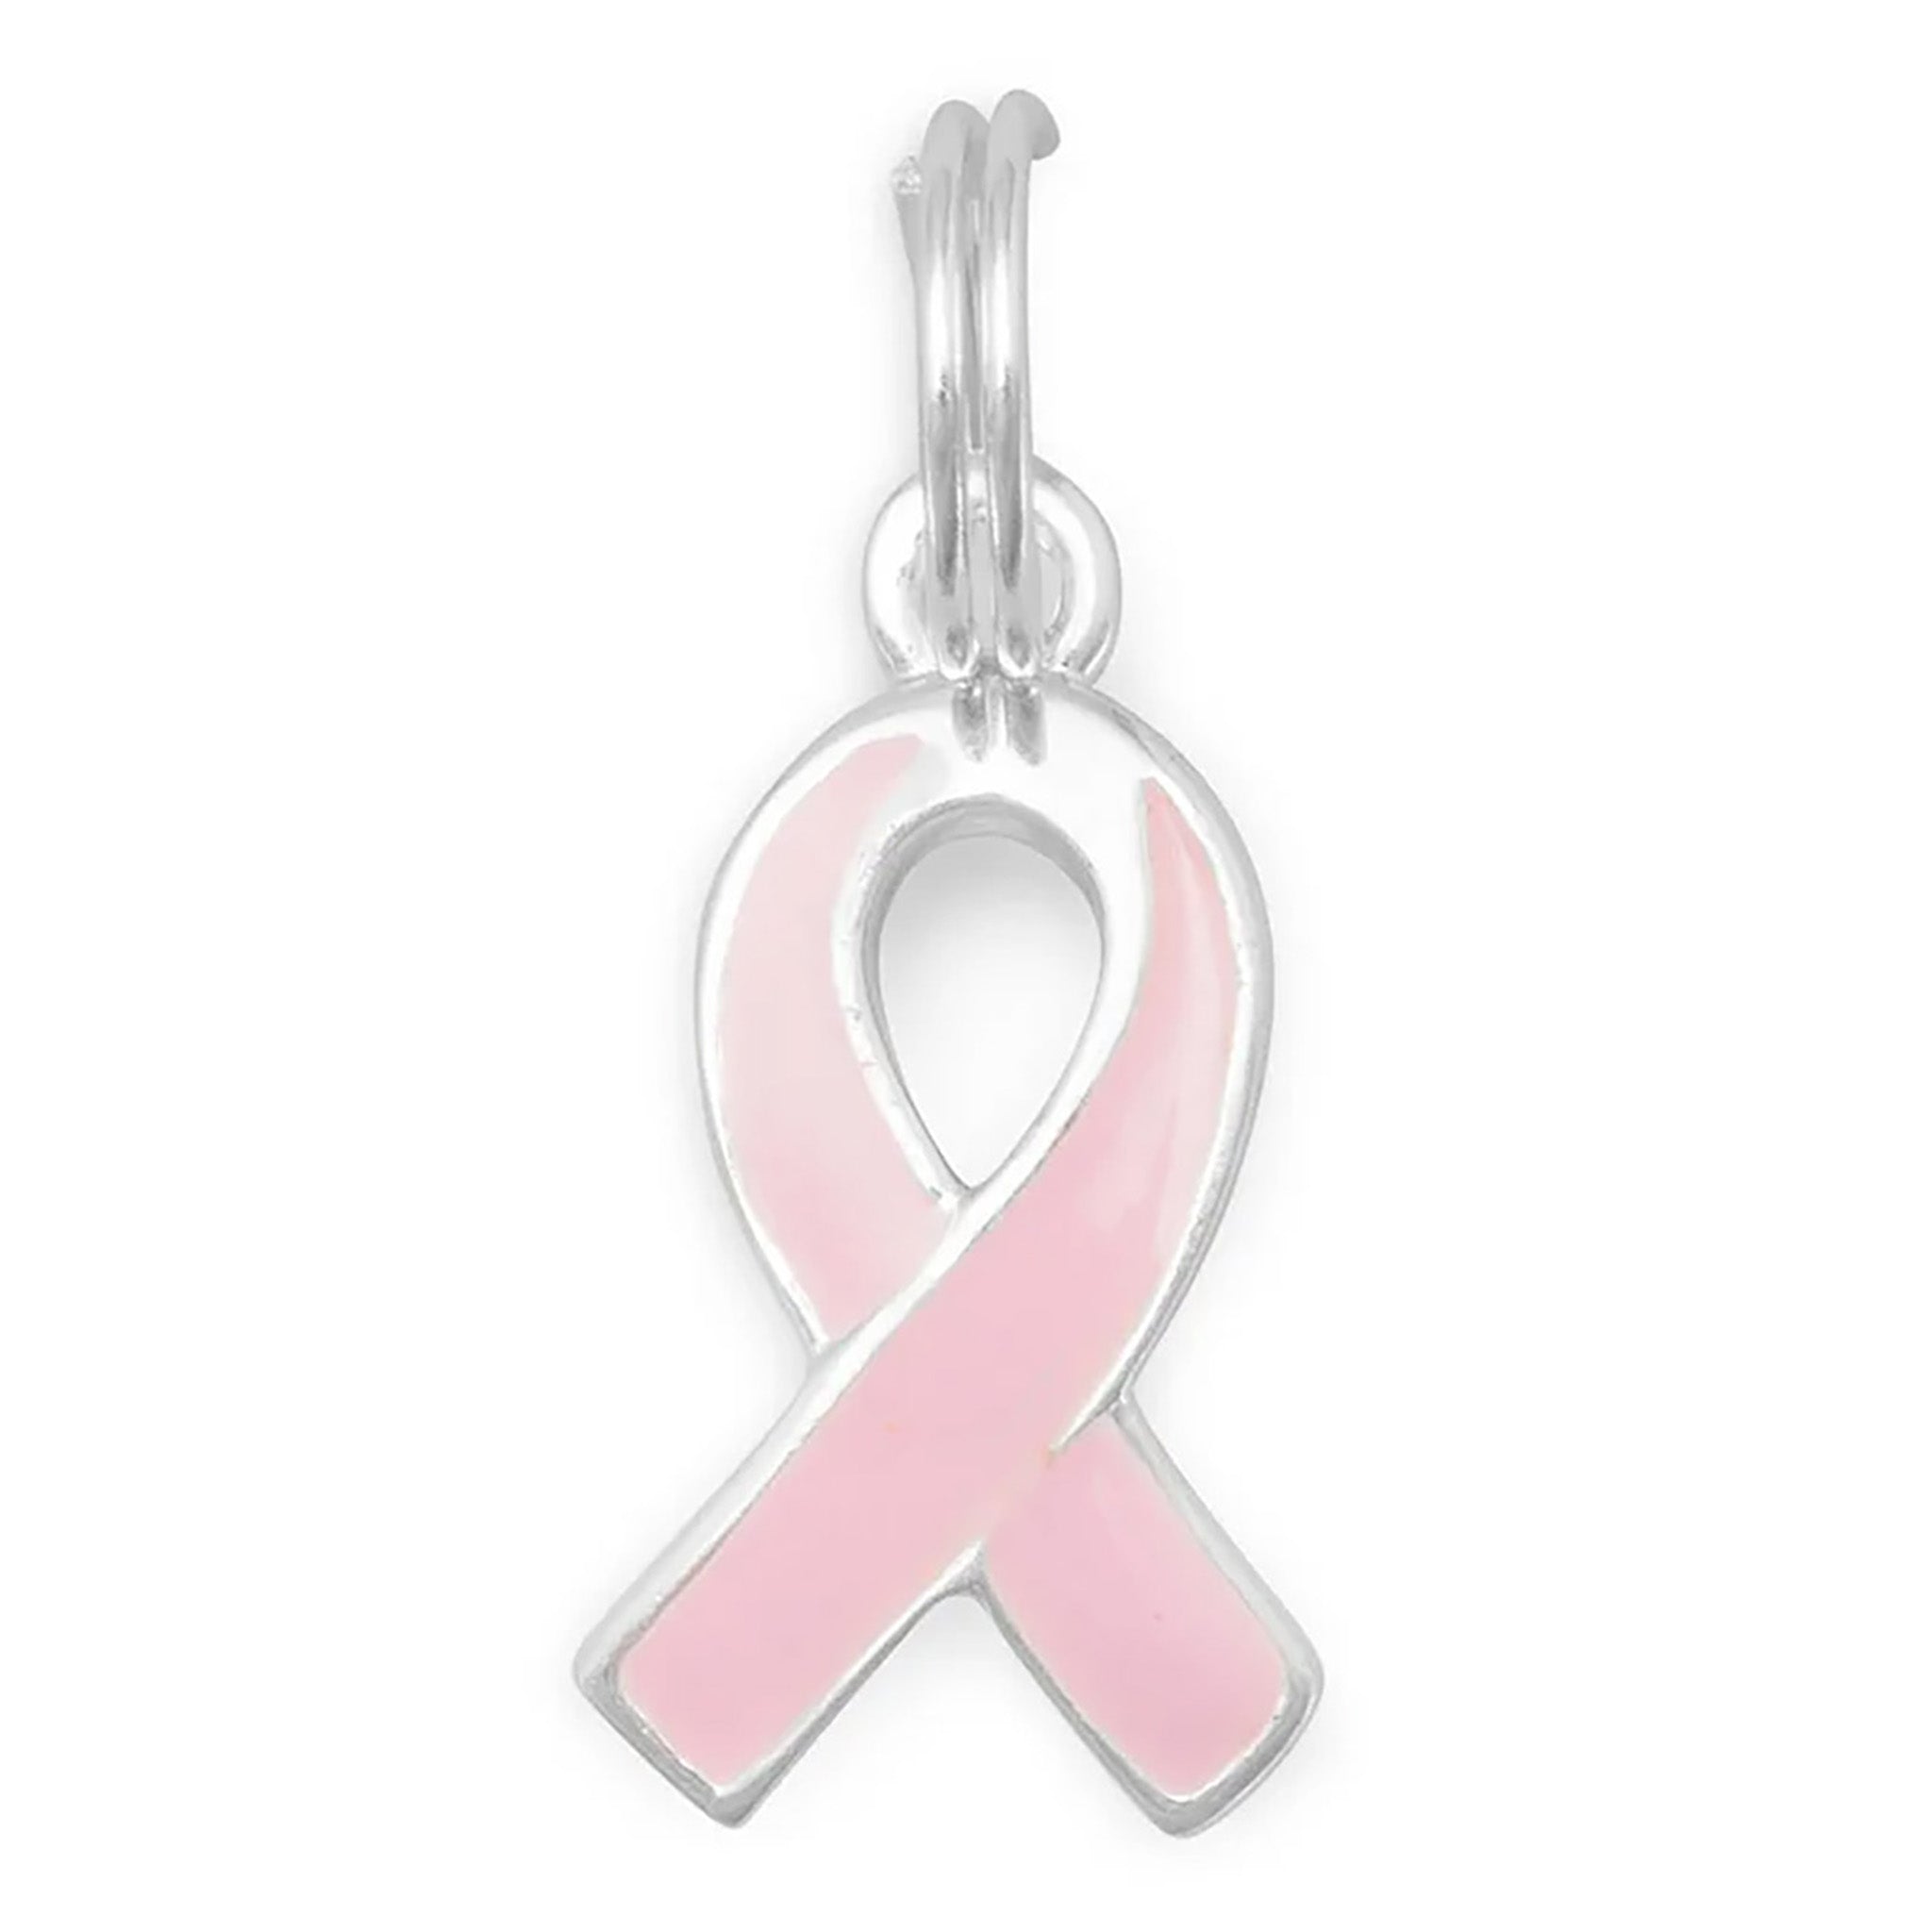 Cancer Awareness Pink Ribbon Charm